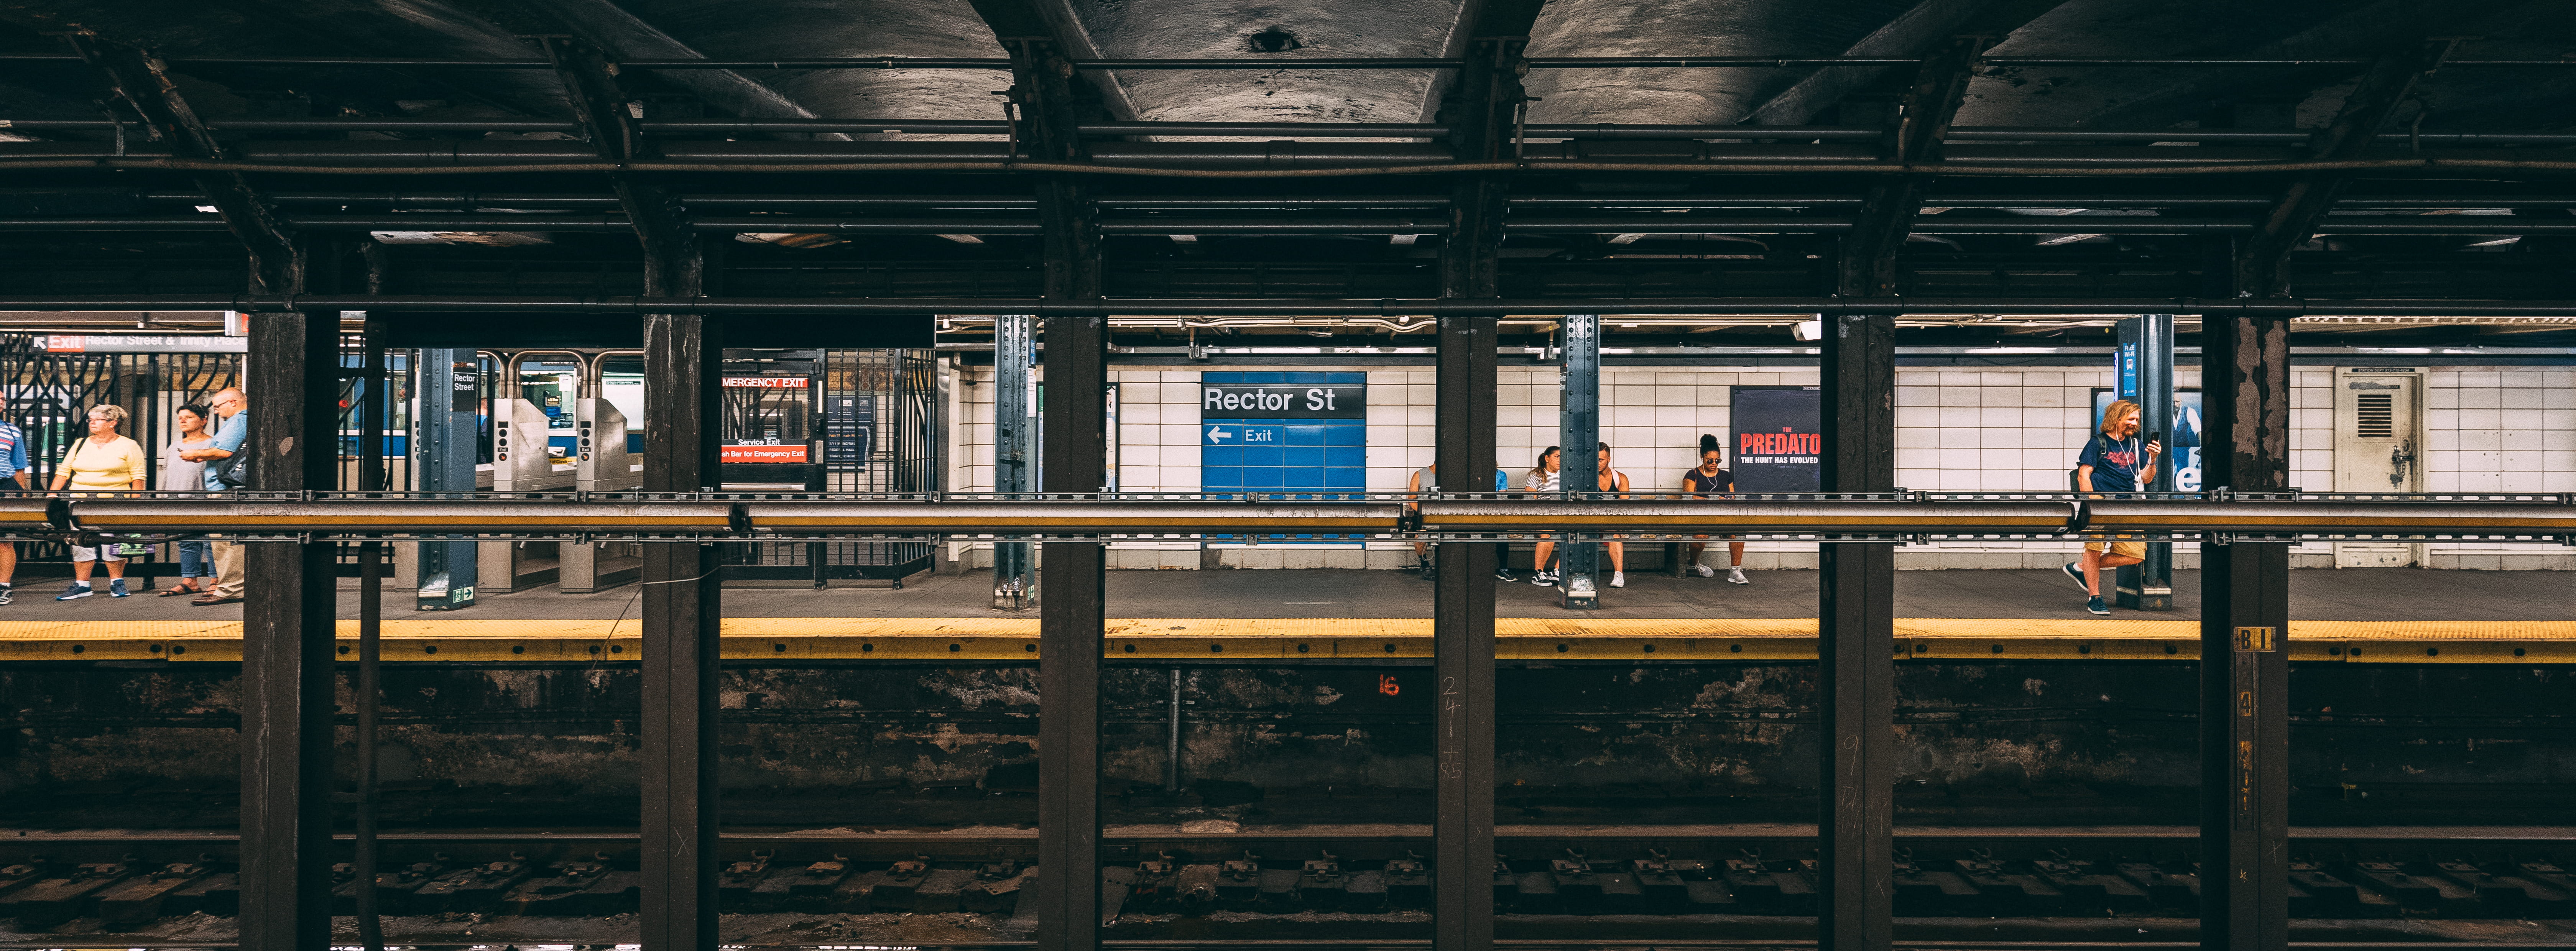 subway, nyc, new york city, wide, ultrawide, ultra-wide, platform